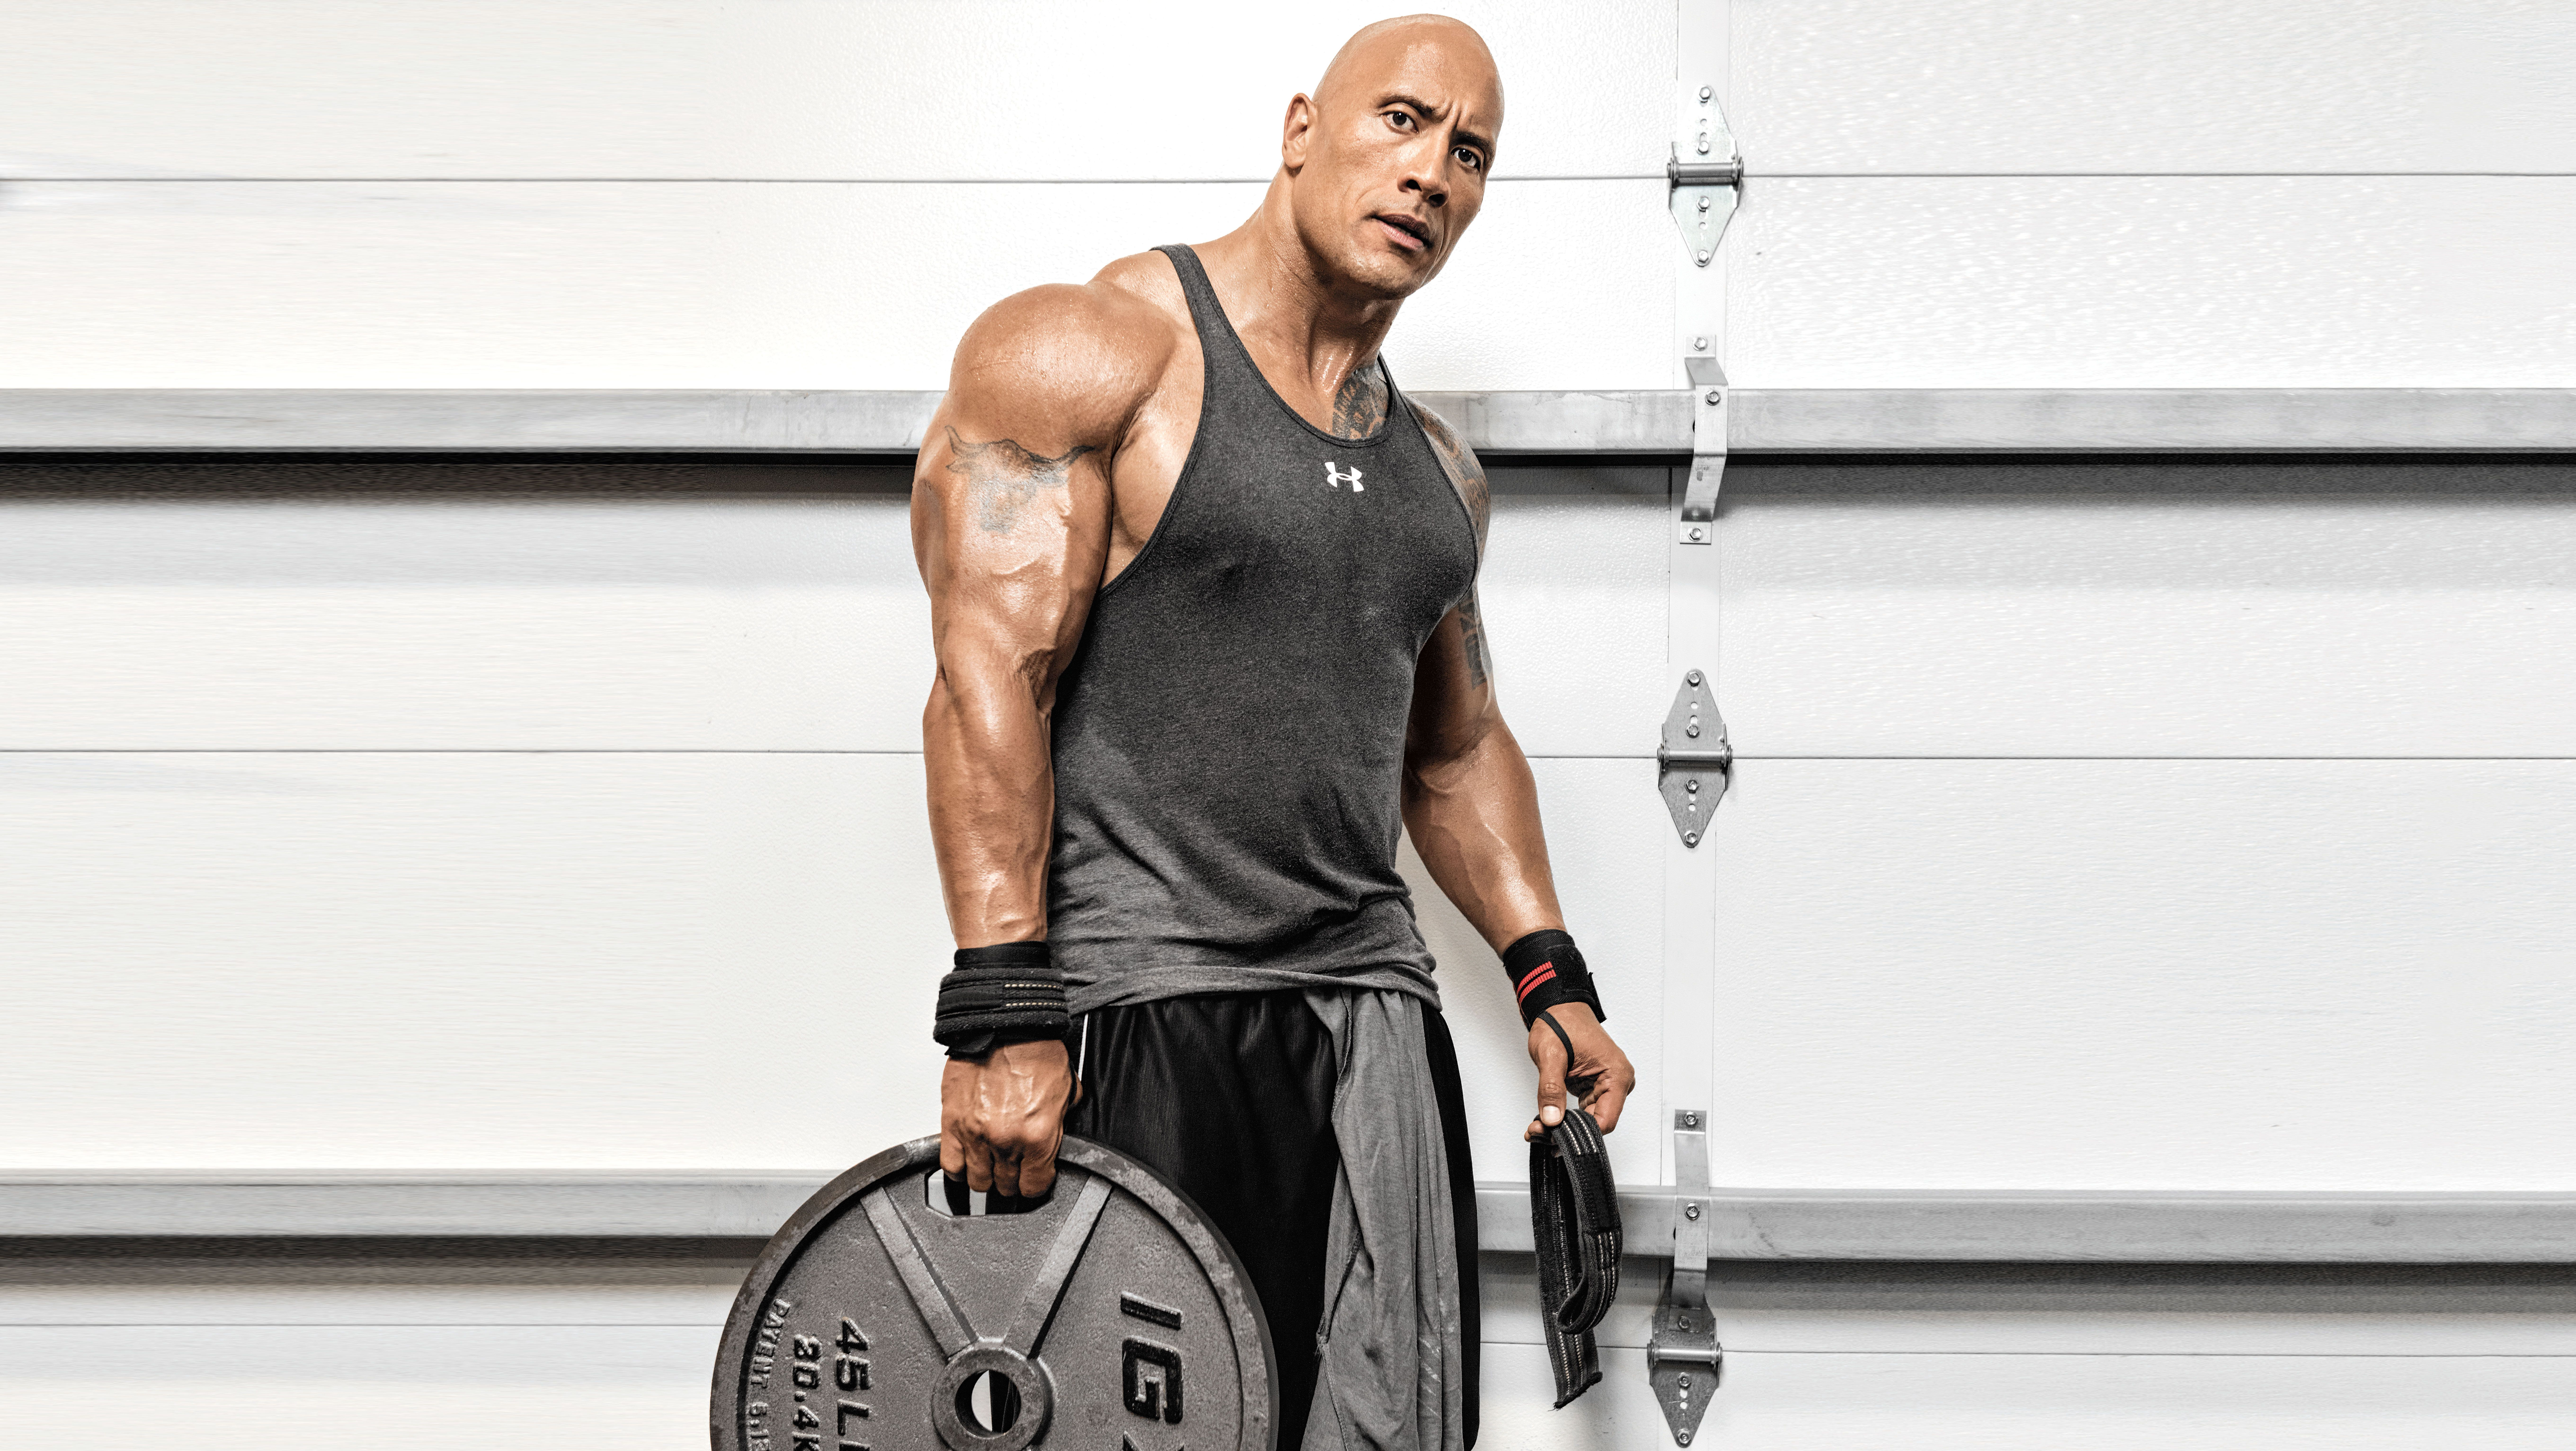 #Weights, #The Rock, K, #Workout, #Dwayne Johnson, K